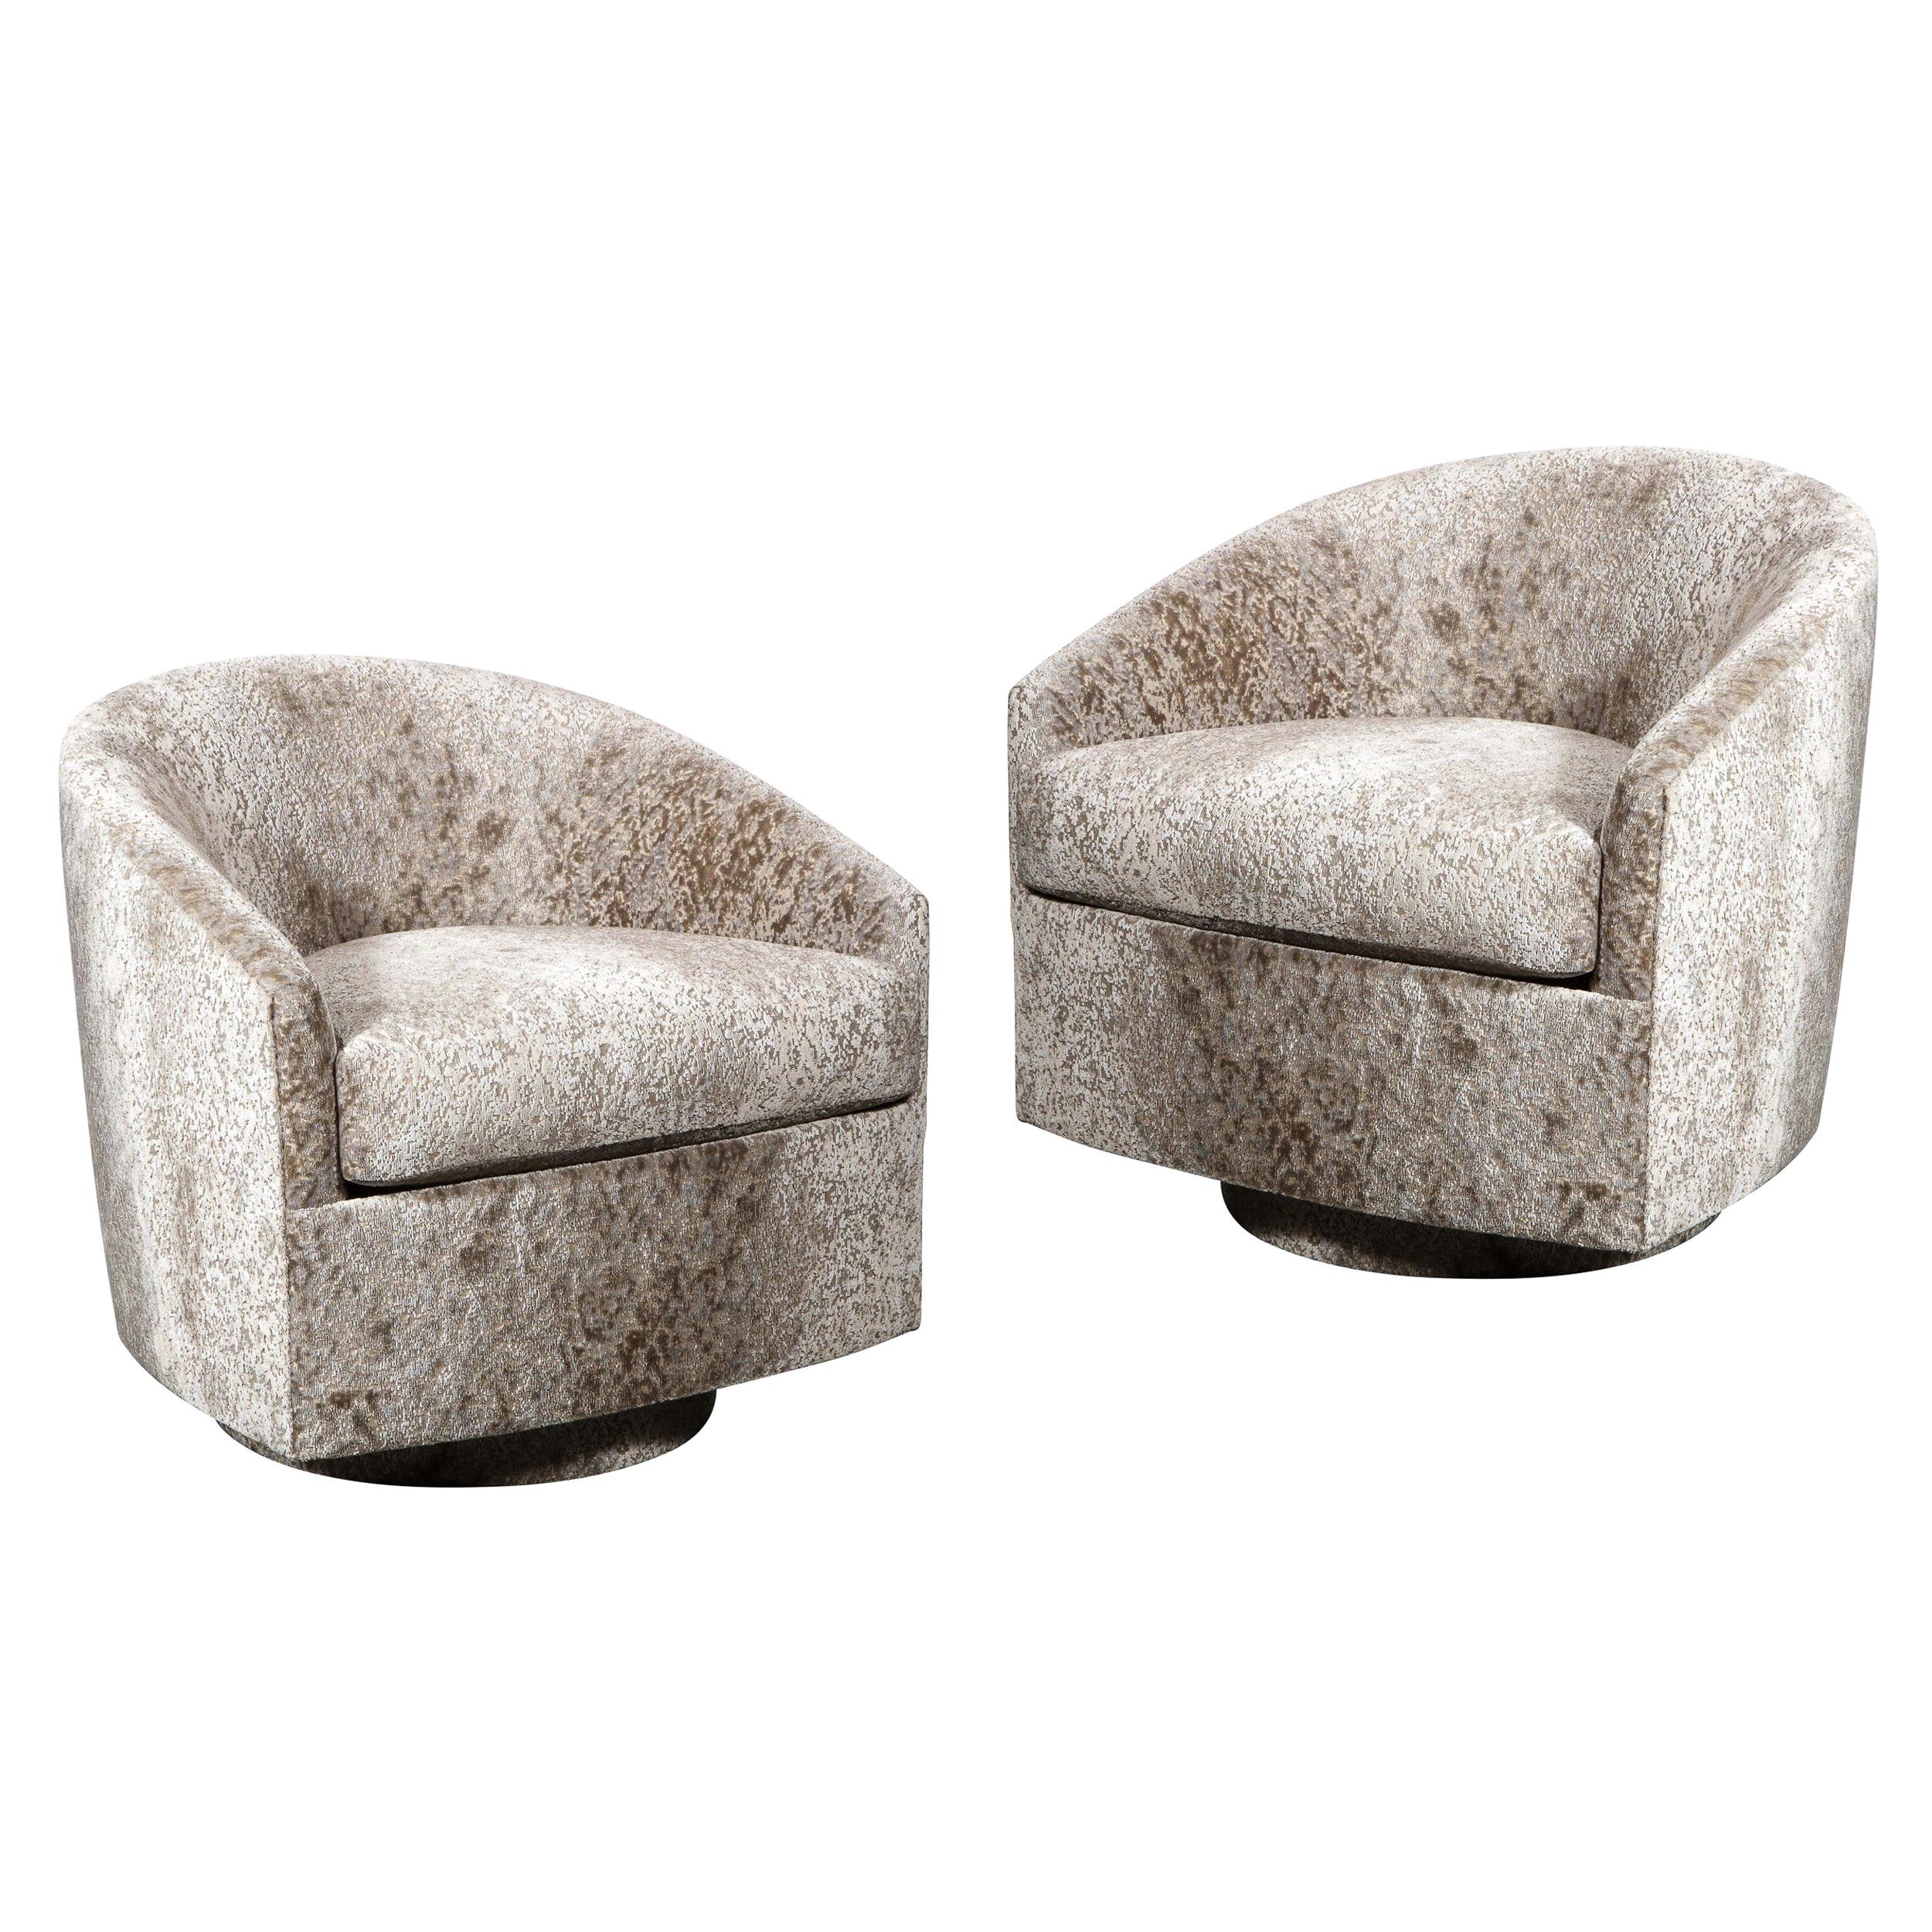 Pair of Mid Century Swivel Barrel Back Lounge Chairs in Holly Hunt Velvet